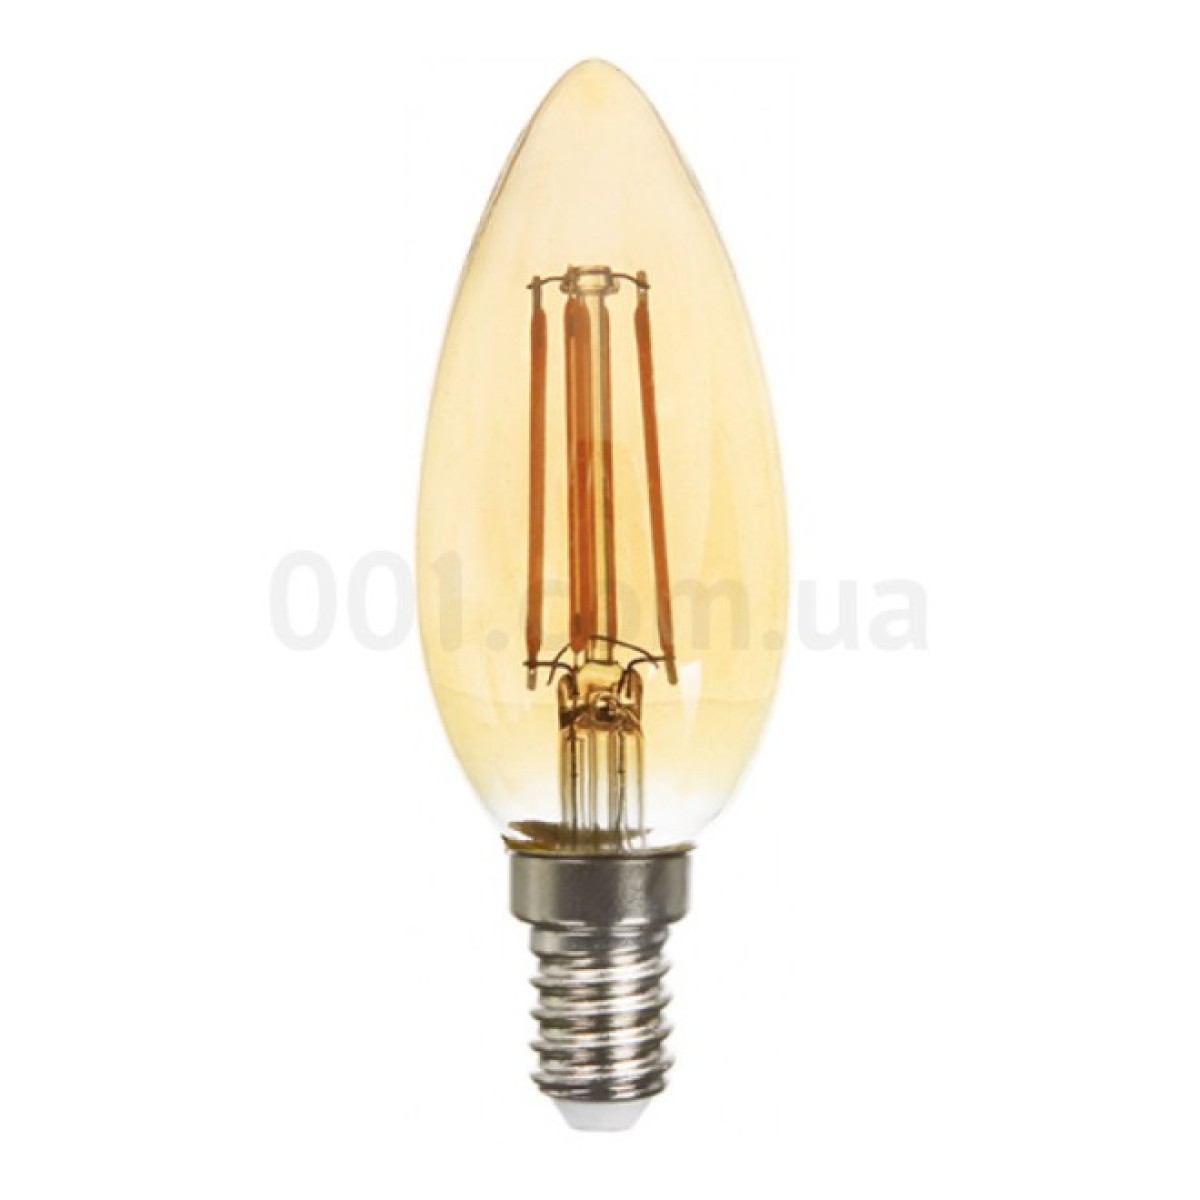 Светодиодная лампа LB-158 C37 (свеча) филамент золото 6Вт 2200K E14, Feron 98_98.jpg